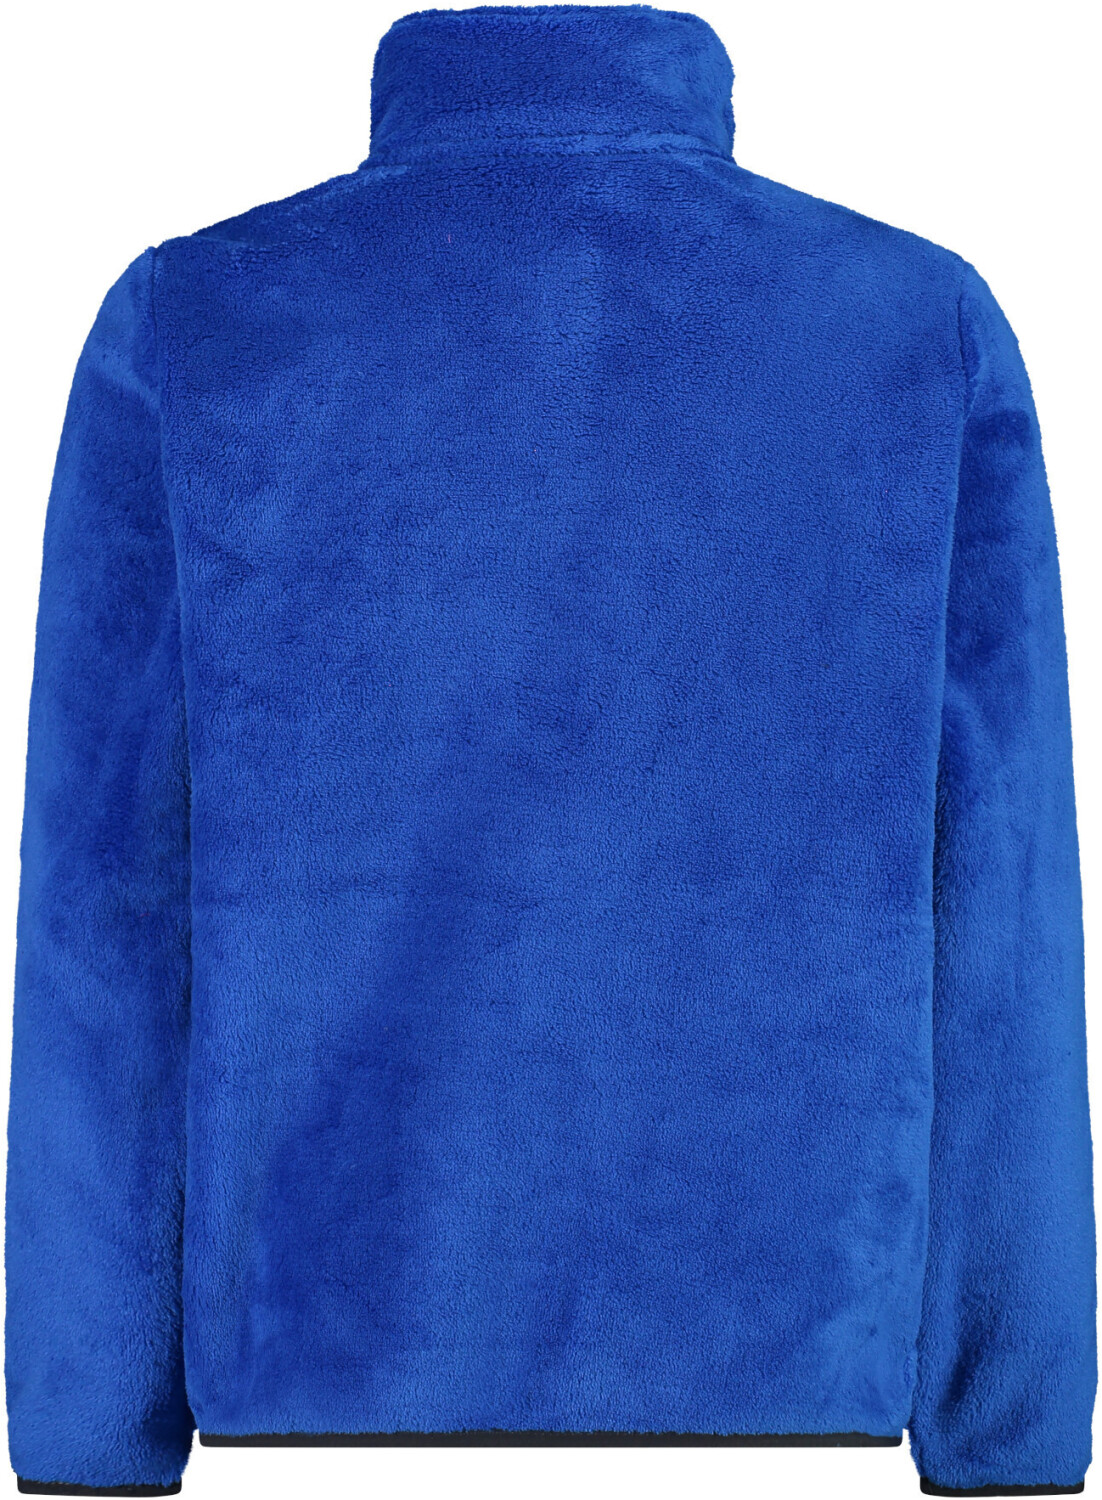 21,99 CMP Boy | b.blue-danubio (38P1414) ab Preisvergleich bei € Jacket